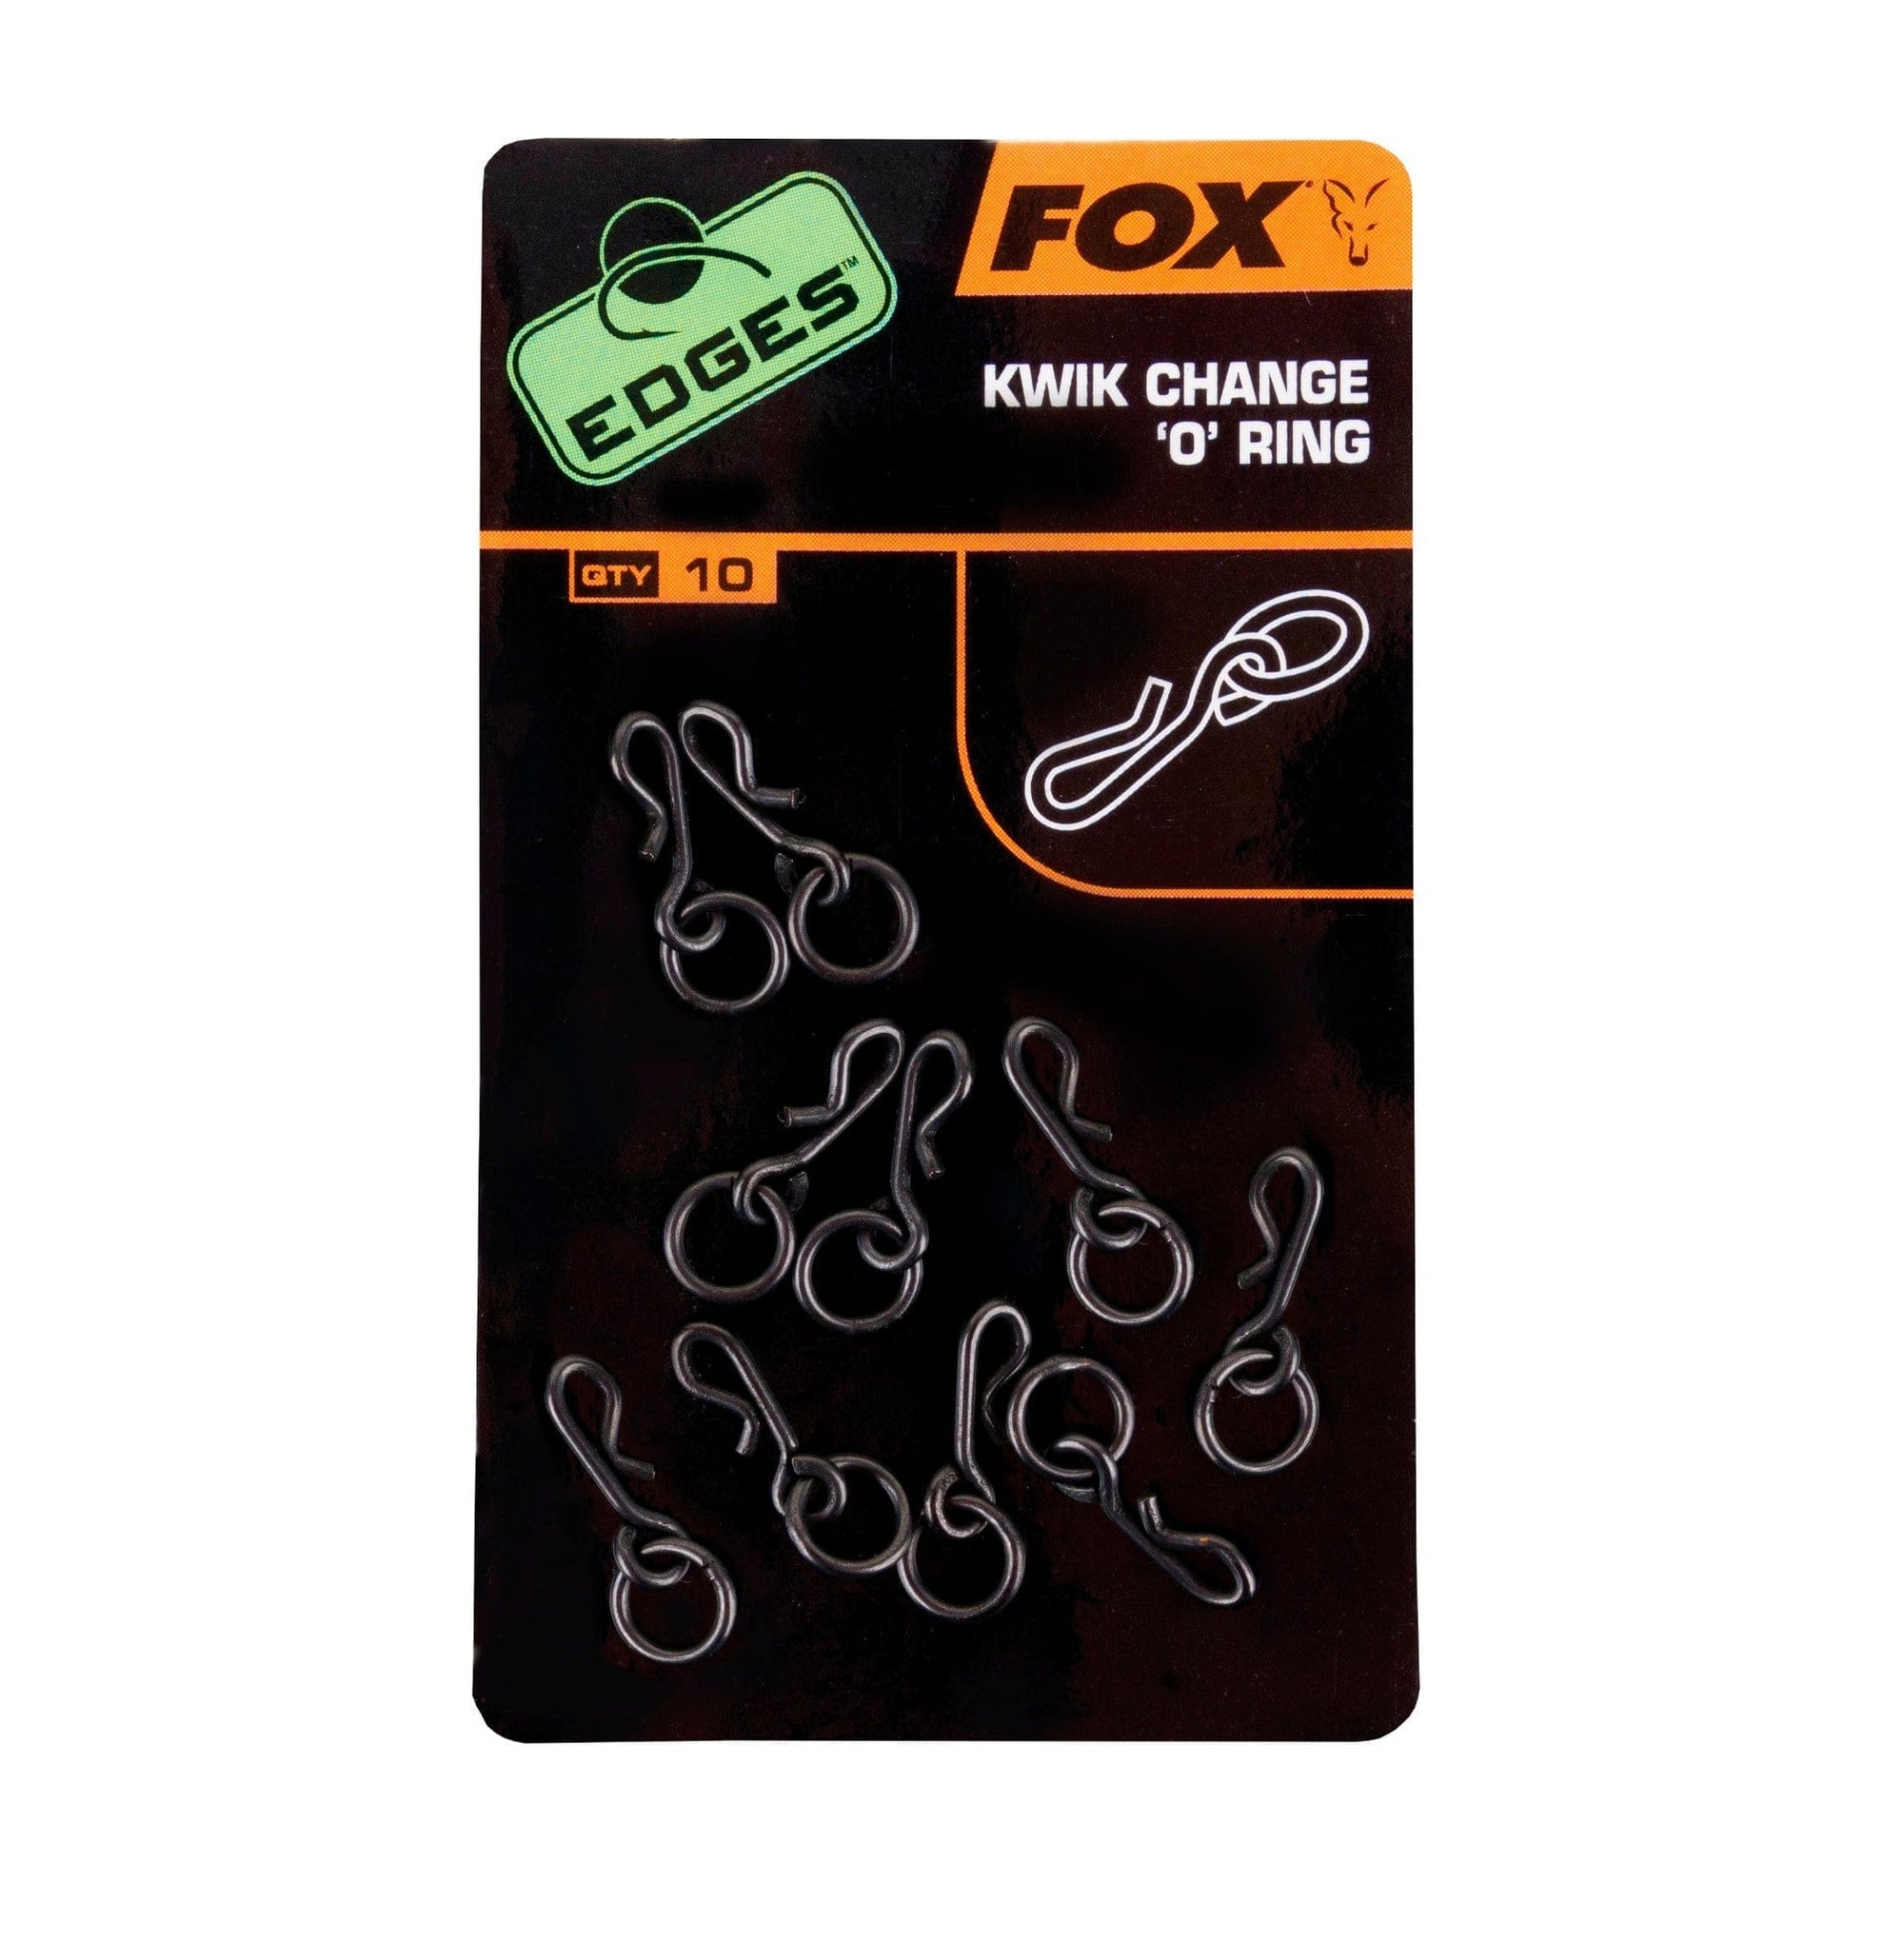 FOX Edges Kwik Change "O"Ring x 10.